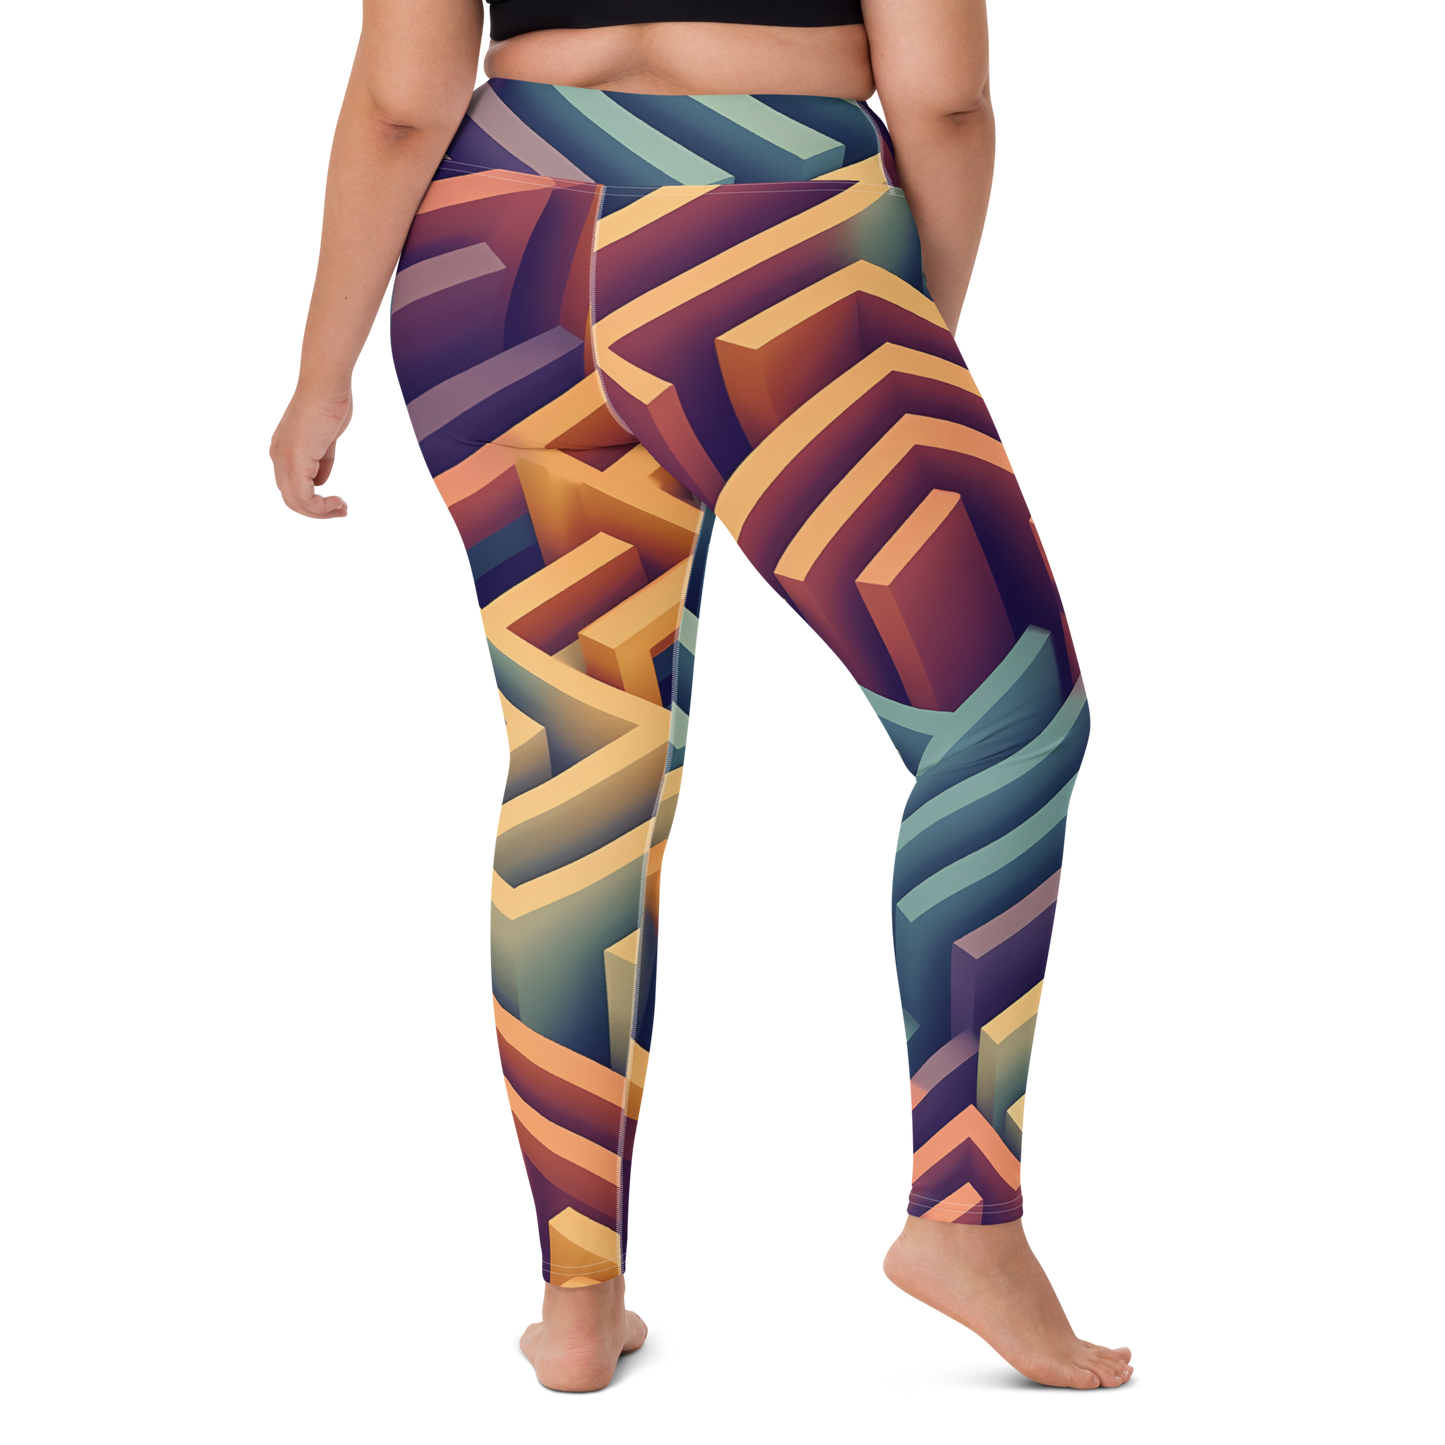 3D Maze Illusion | 3D Patterns | All-Over Print Yoga Leggings - #3